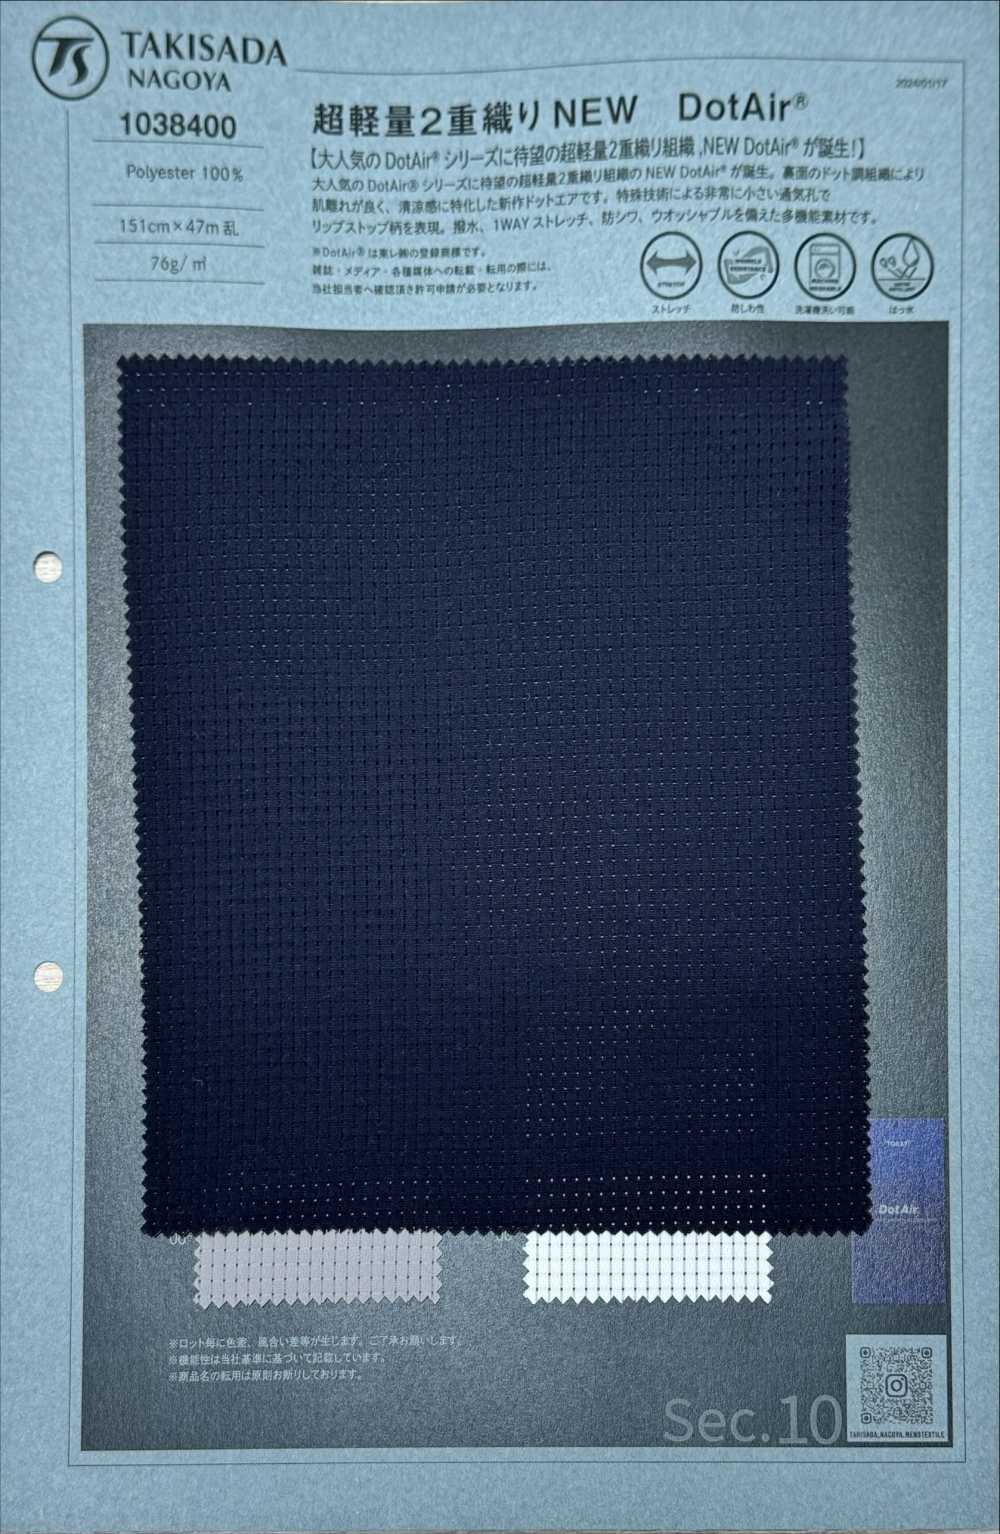 1038400 Ultra-light Double Weave NEW DotAir®[Textile / Fabric] Takisada Nagoya